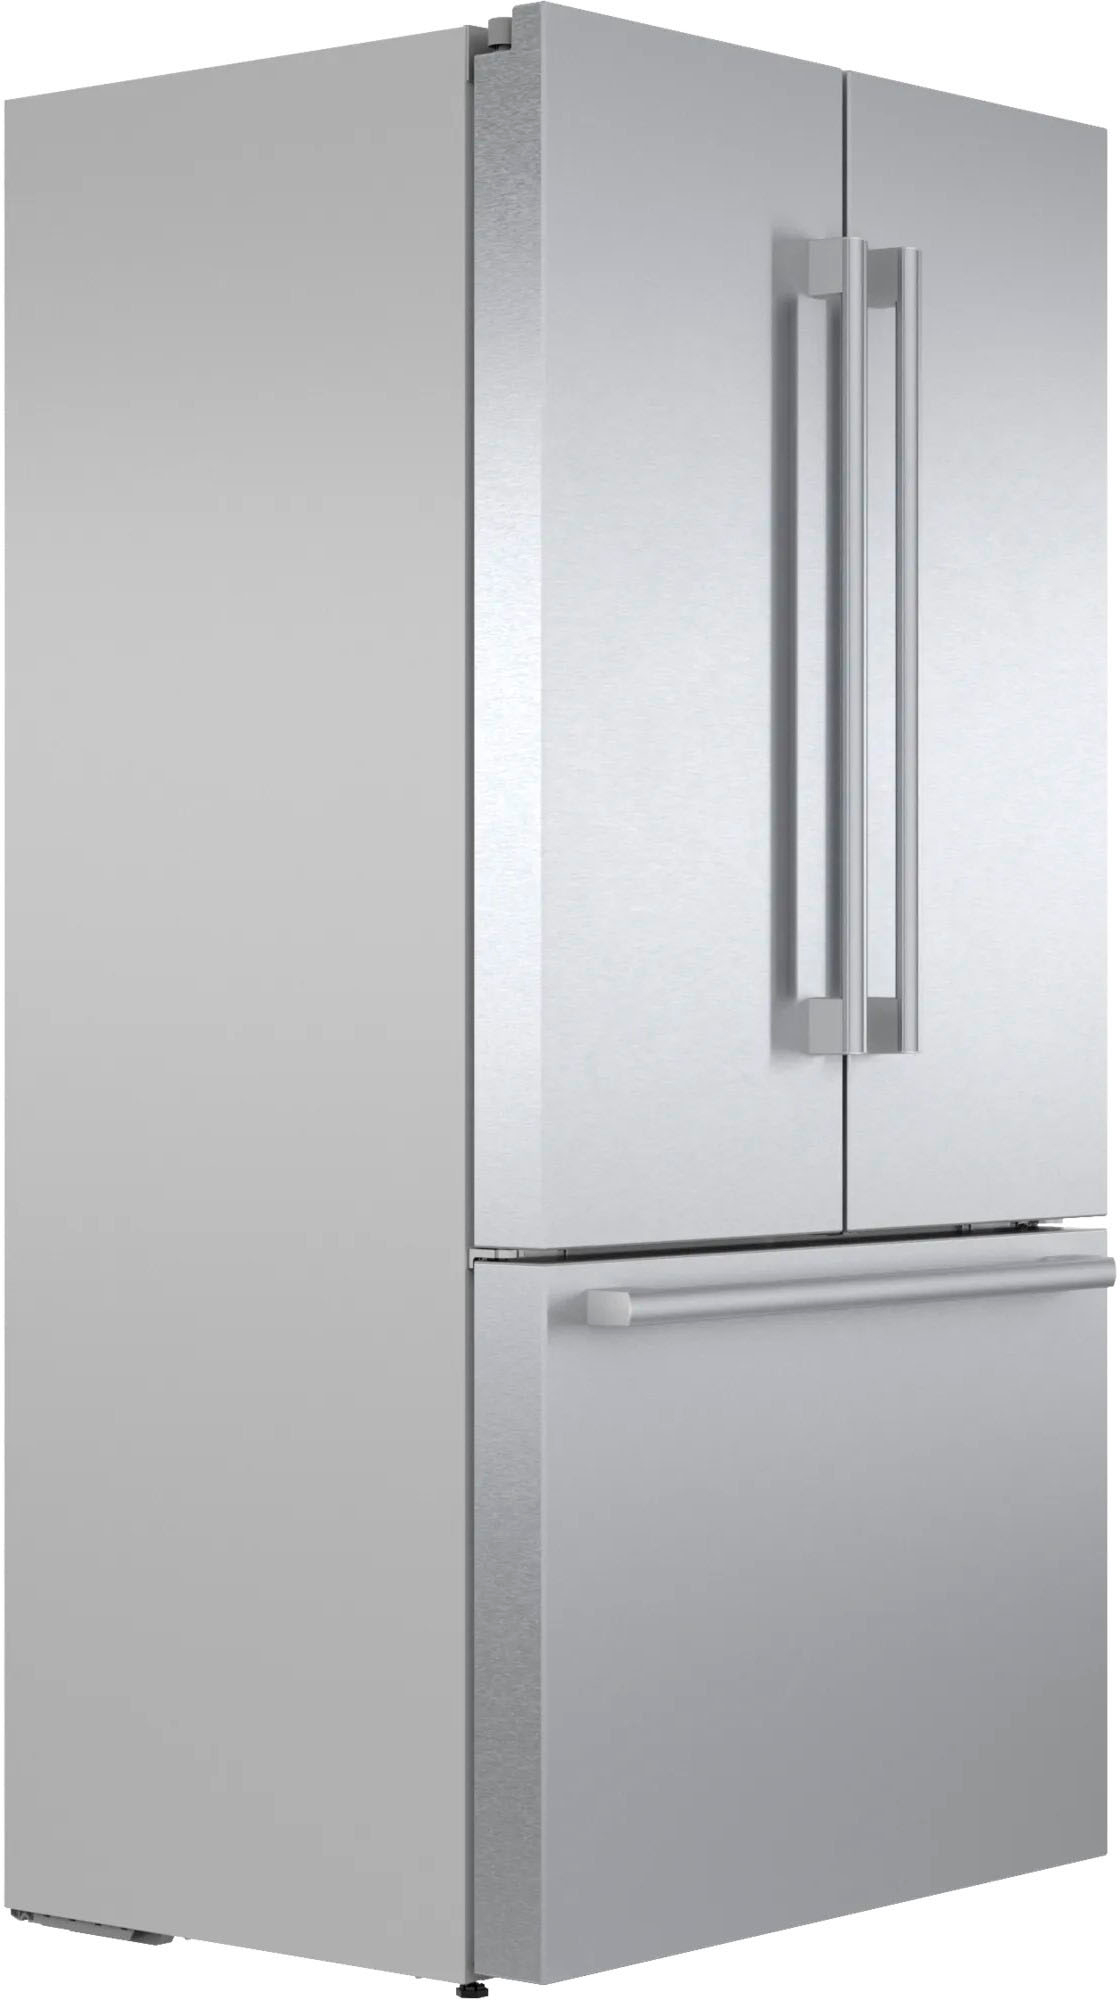 Angle View: Bosch - Benchmark 16 cu. ft. Bottom Freezer Built-In Smart Refrigerator - Custom Panel Ready